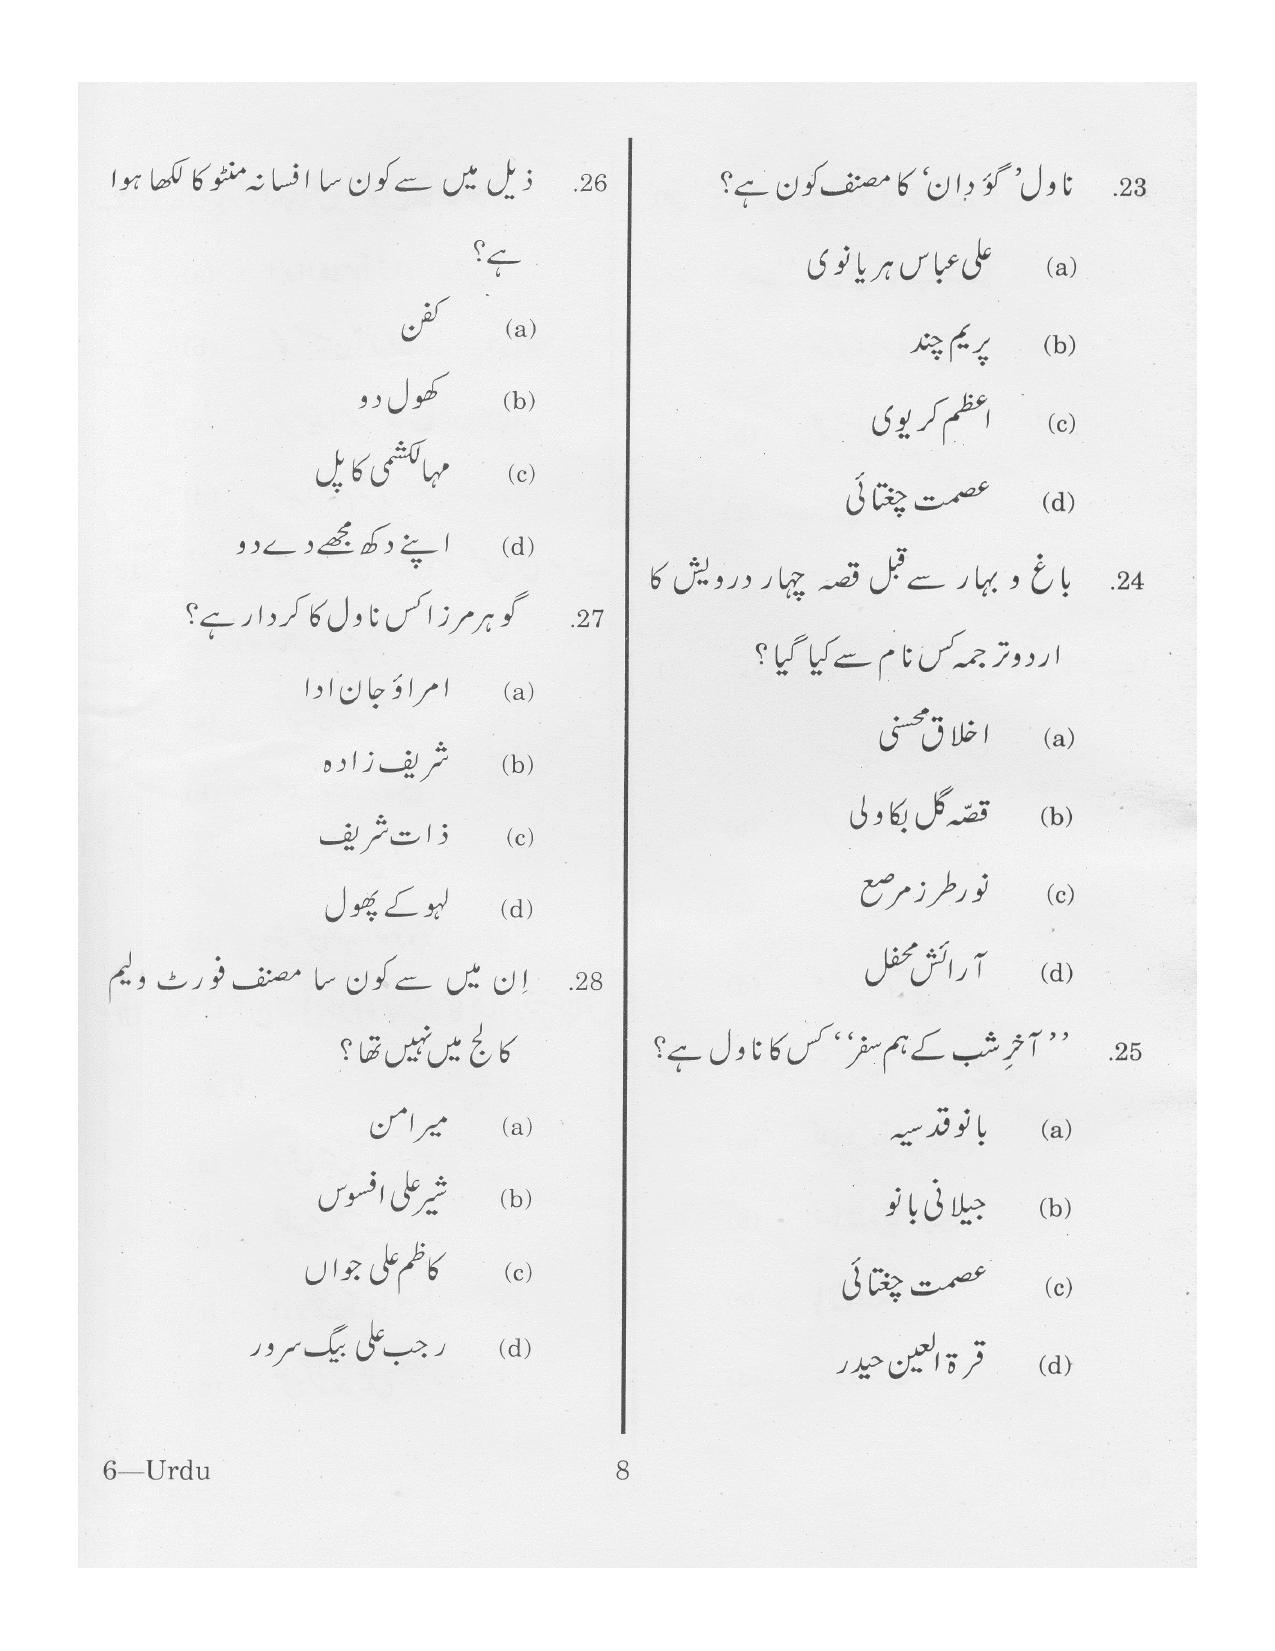 URATPG Urdu 2013 Question Paper - Page 7